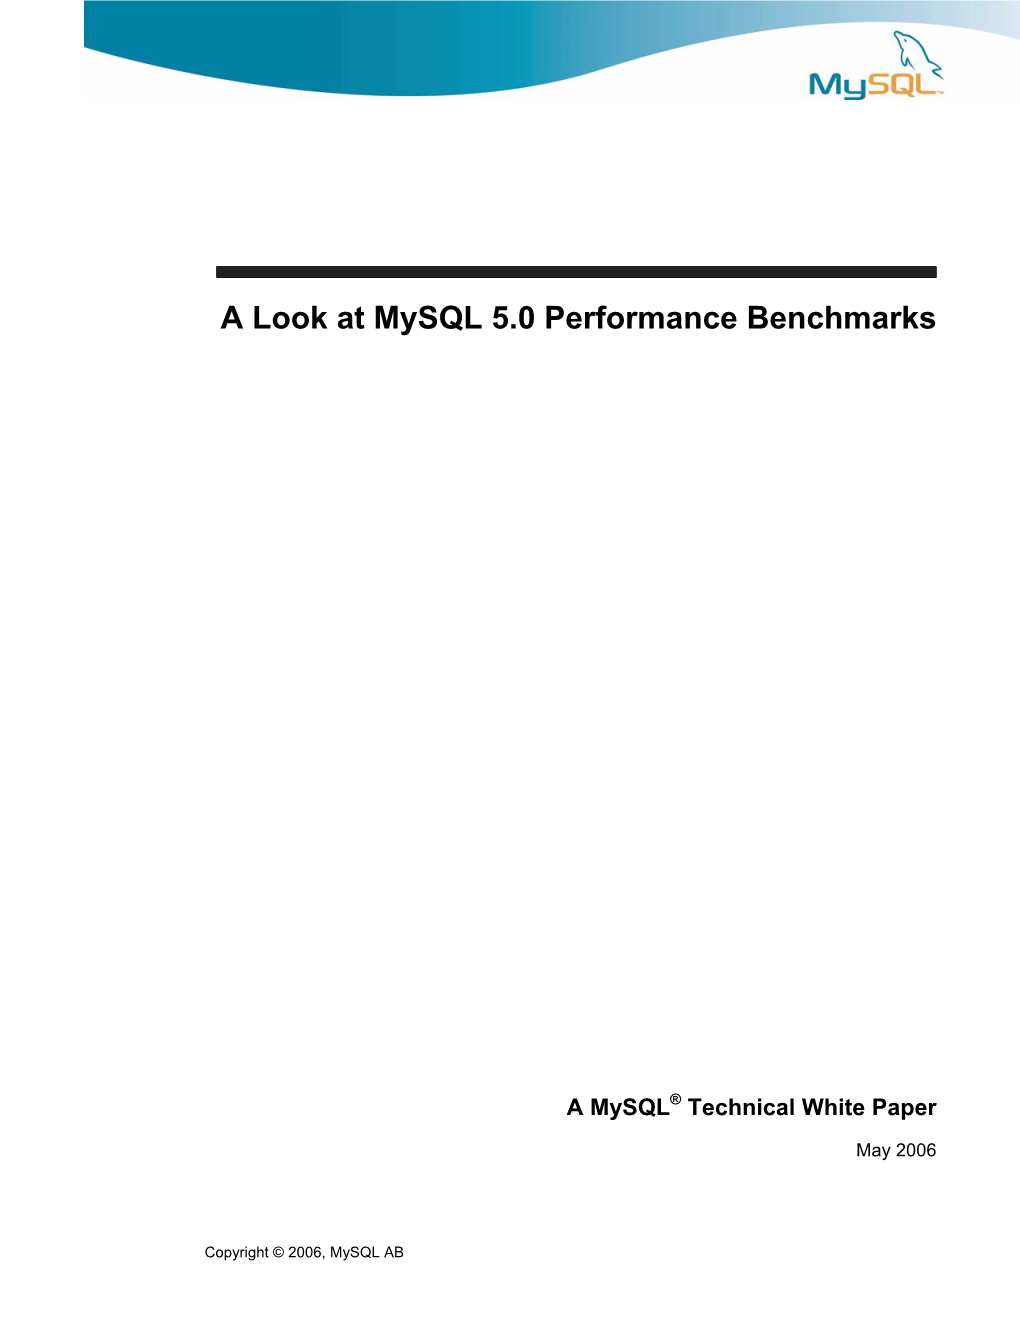 A Look at Mysql 5.0 Performance Benchmarks